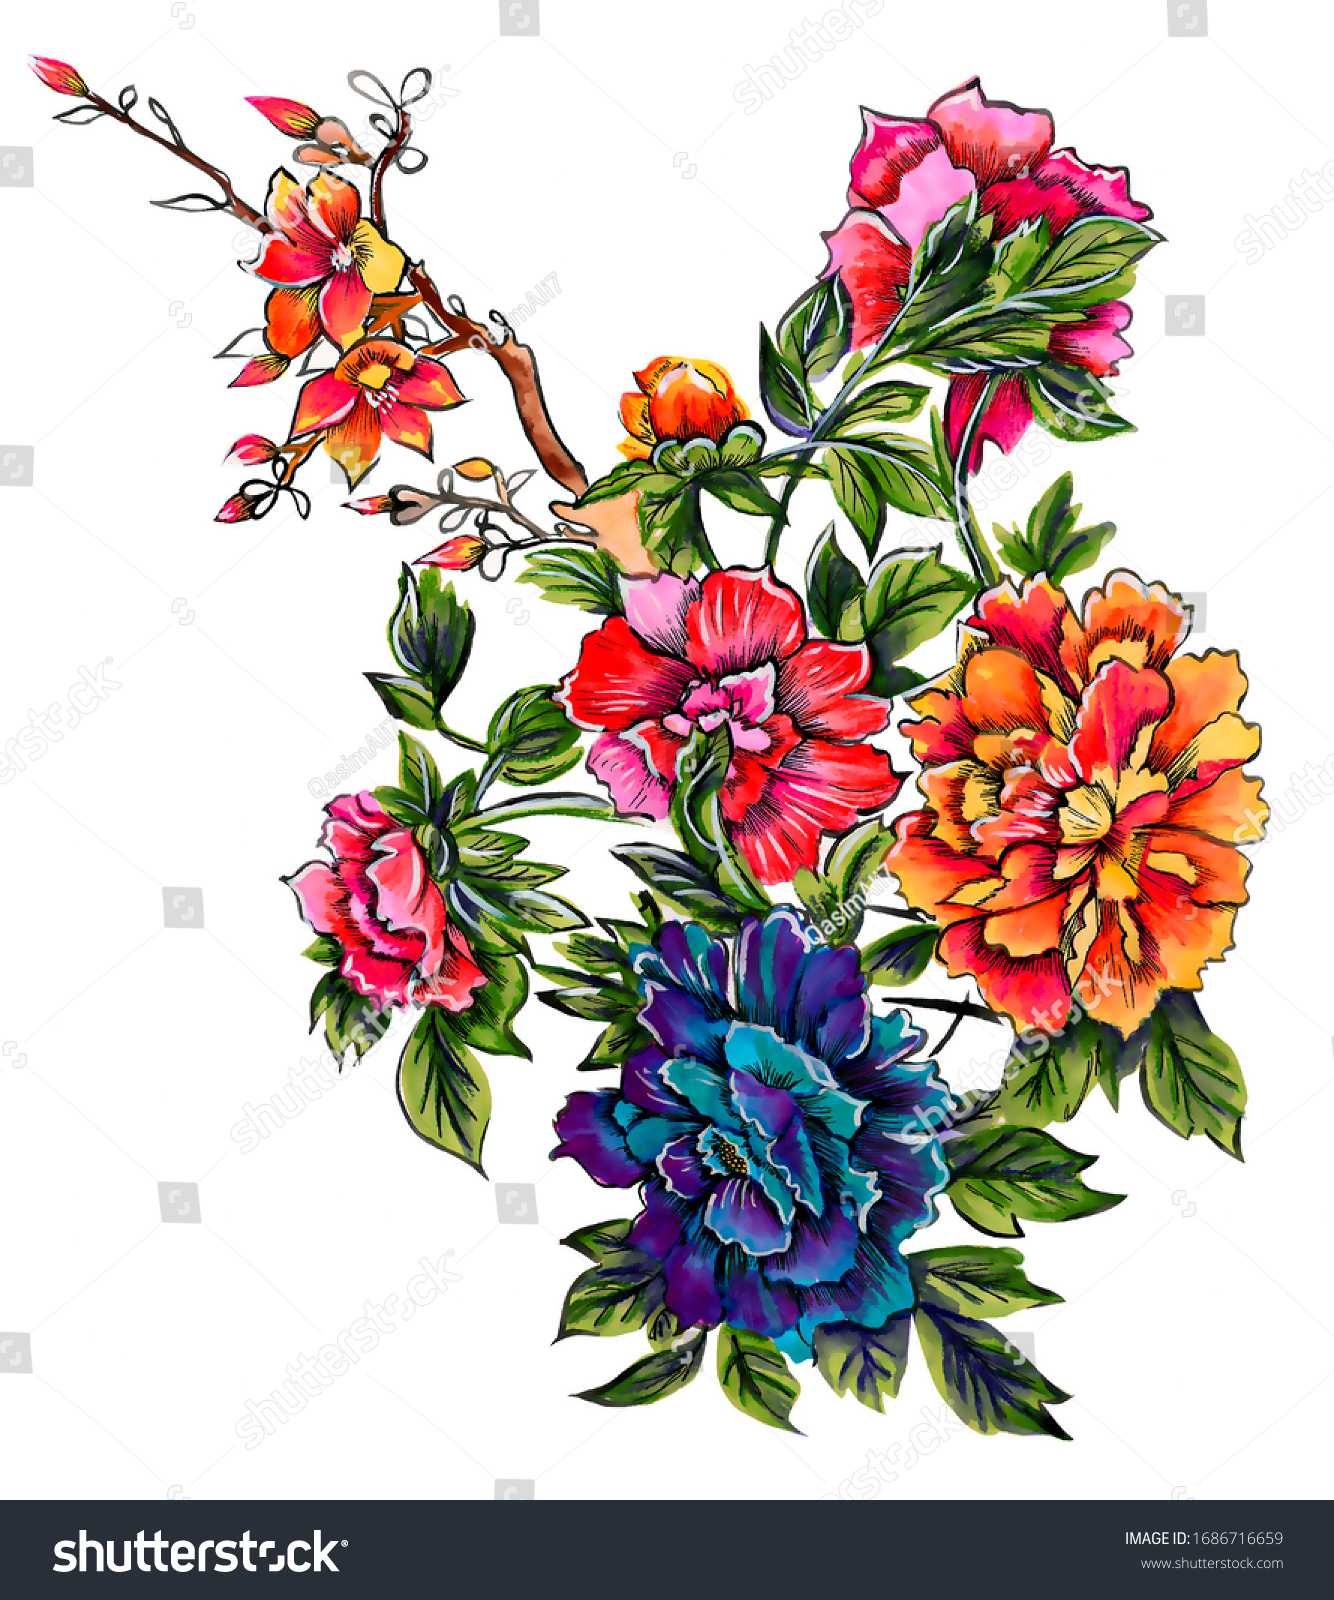 New Digital Textile Flowers Leaves Design Stock Illustration 1686716659 ...